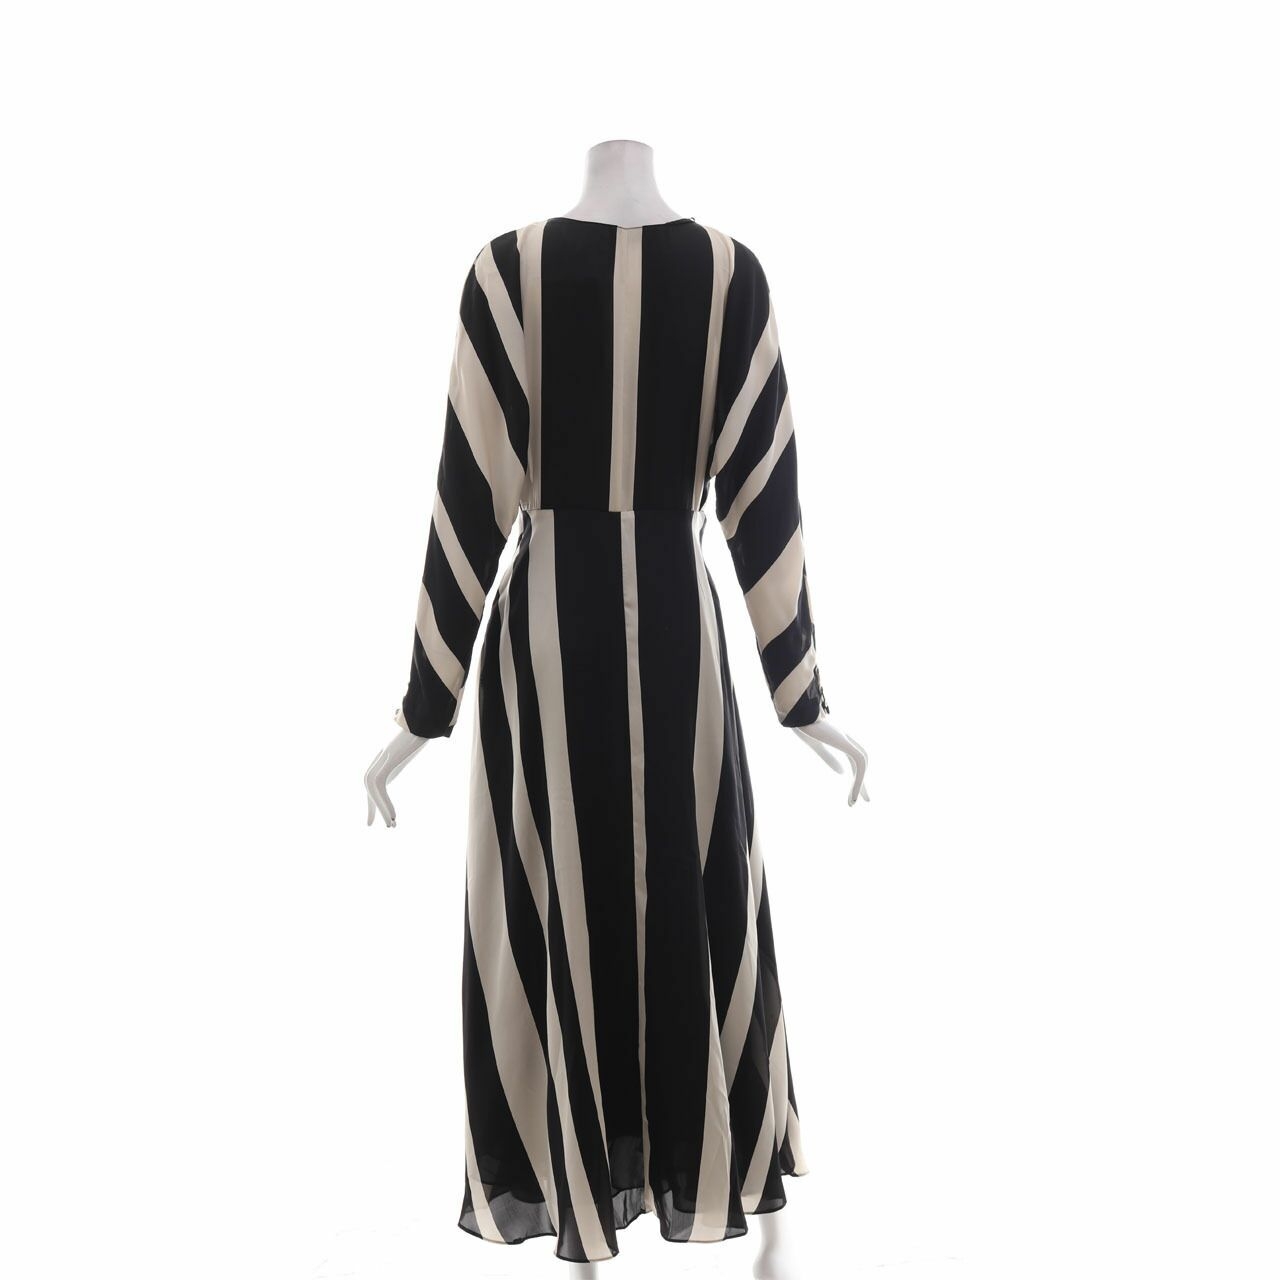 Zara Brown & Black Striped Long Dress